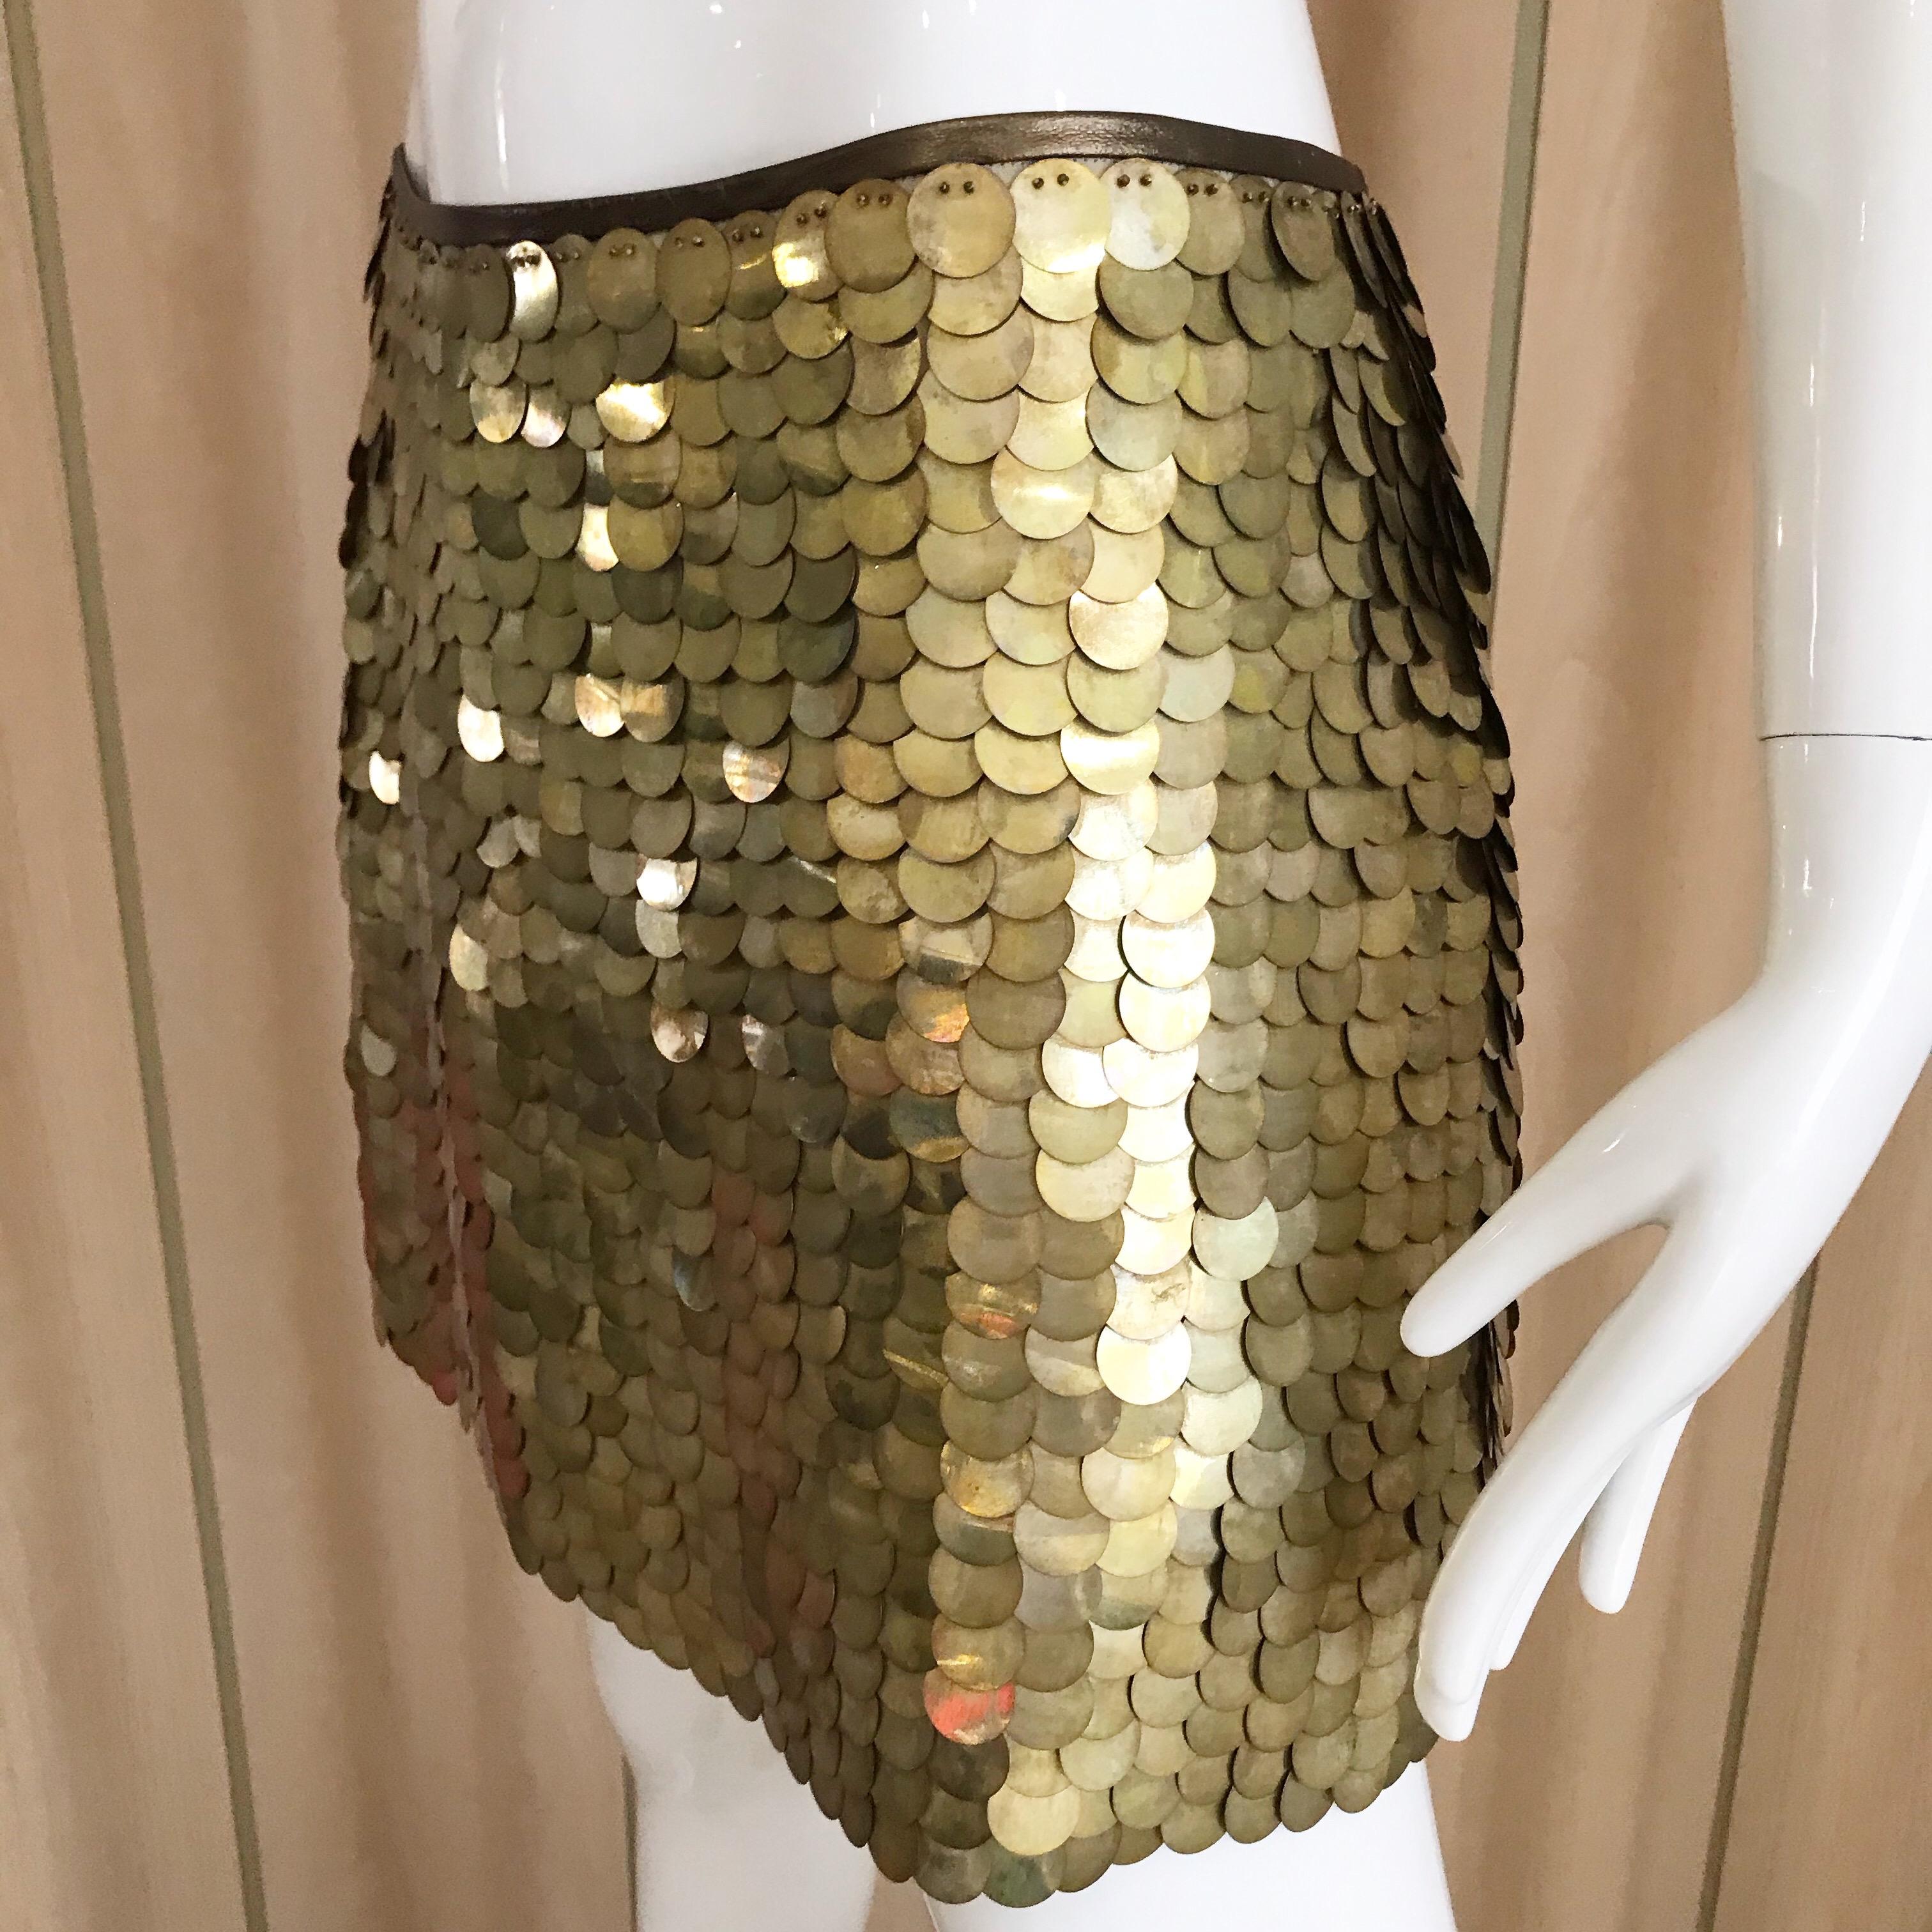 Celine 2000s gold sequin Paillette mini Party skirt. 
Marked size: 40F
Measurement: Waist: 30 inches/ Hip: 38 inches/ Skirt length: 14 inches. 
Skirt lined in silk. 